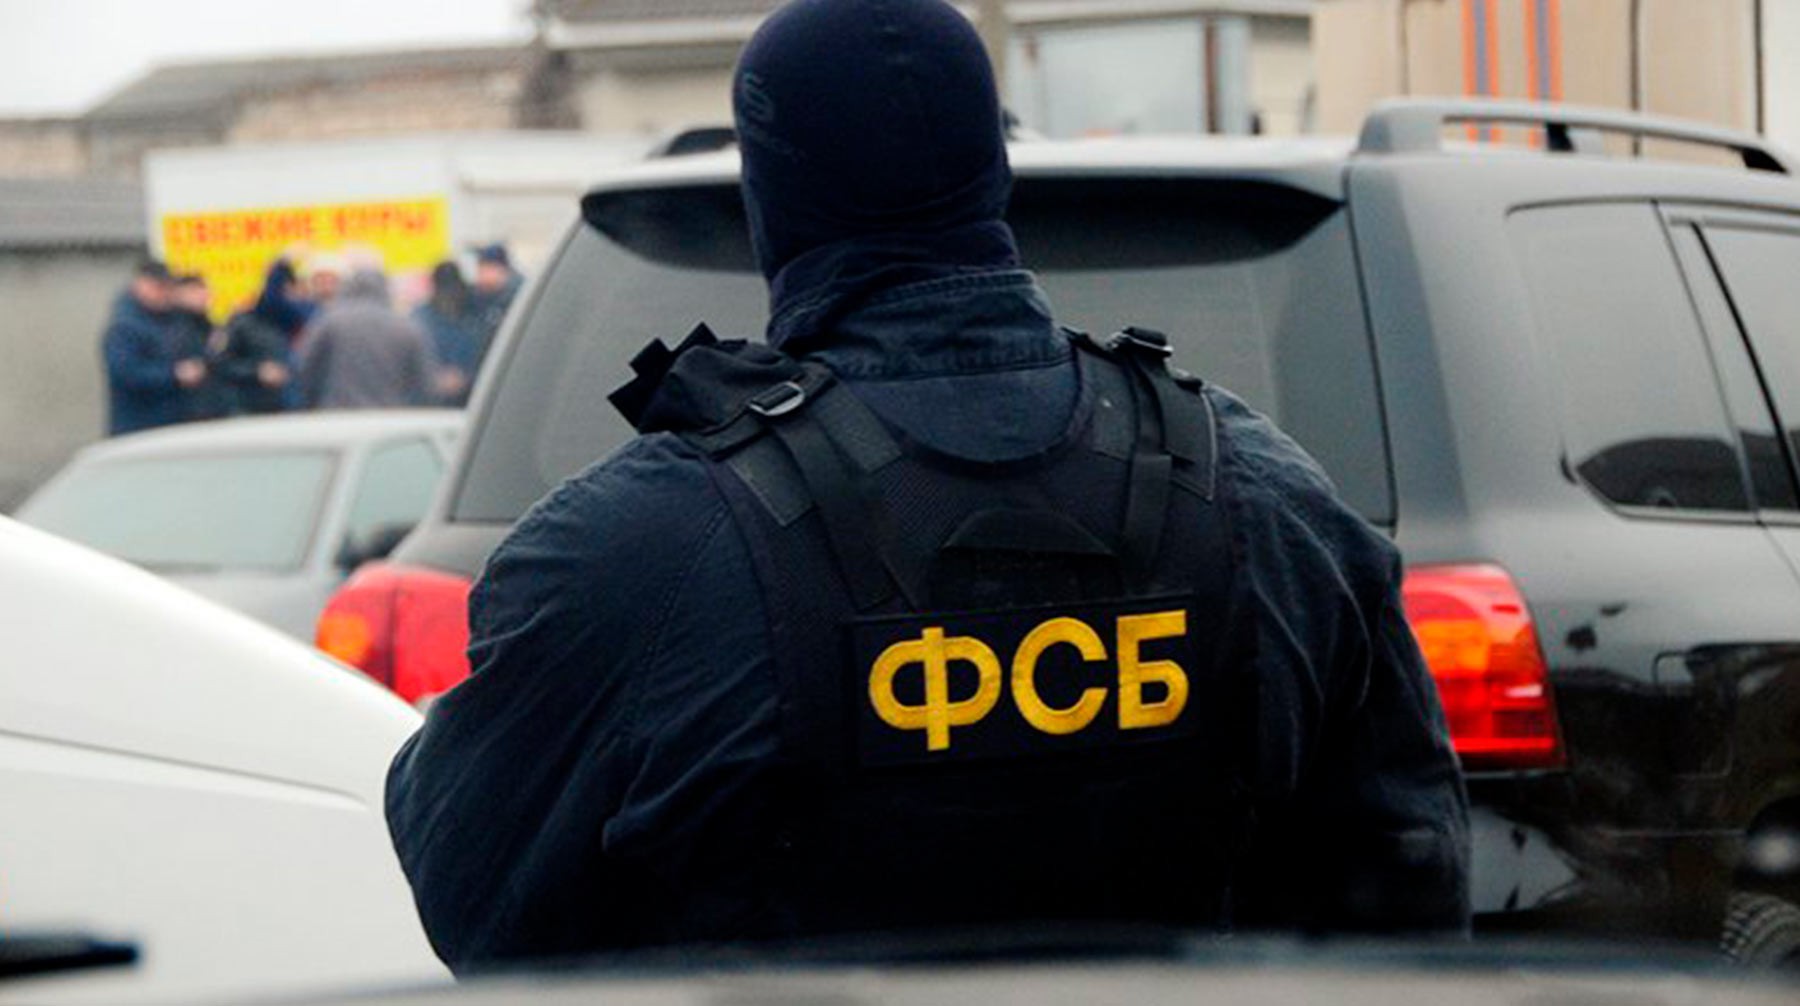 Dailystorm - ФСБ пресекла теракт в Башкирии